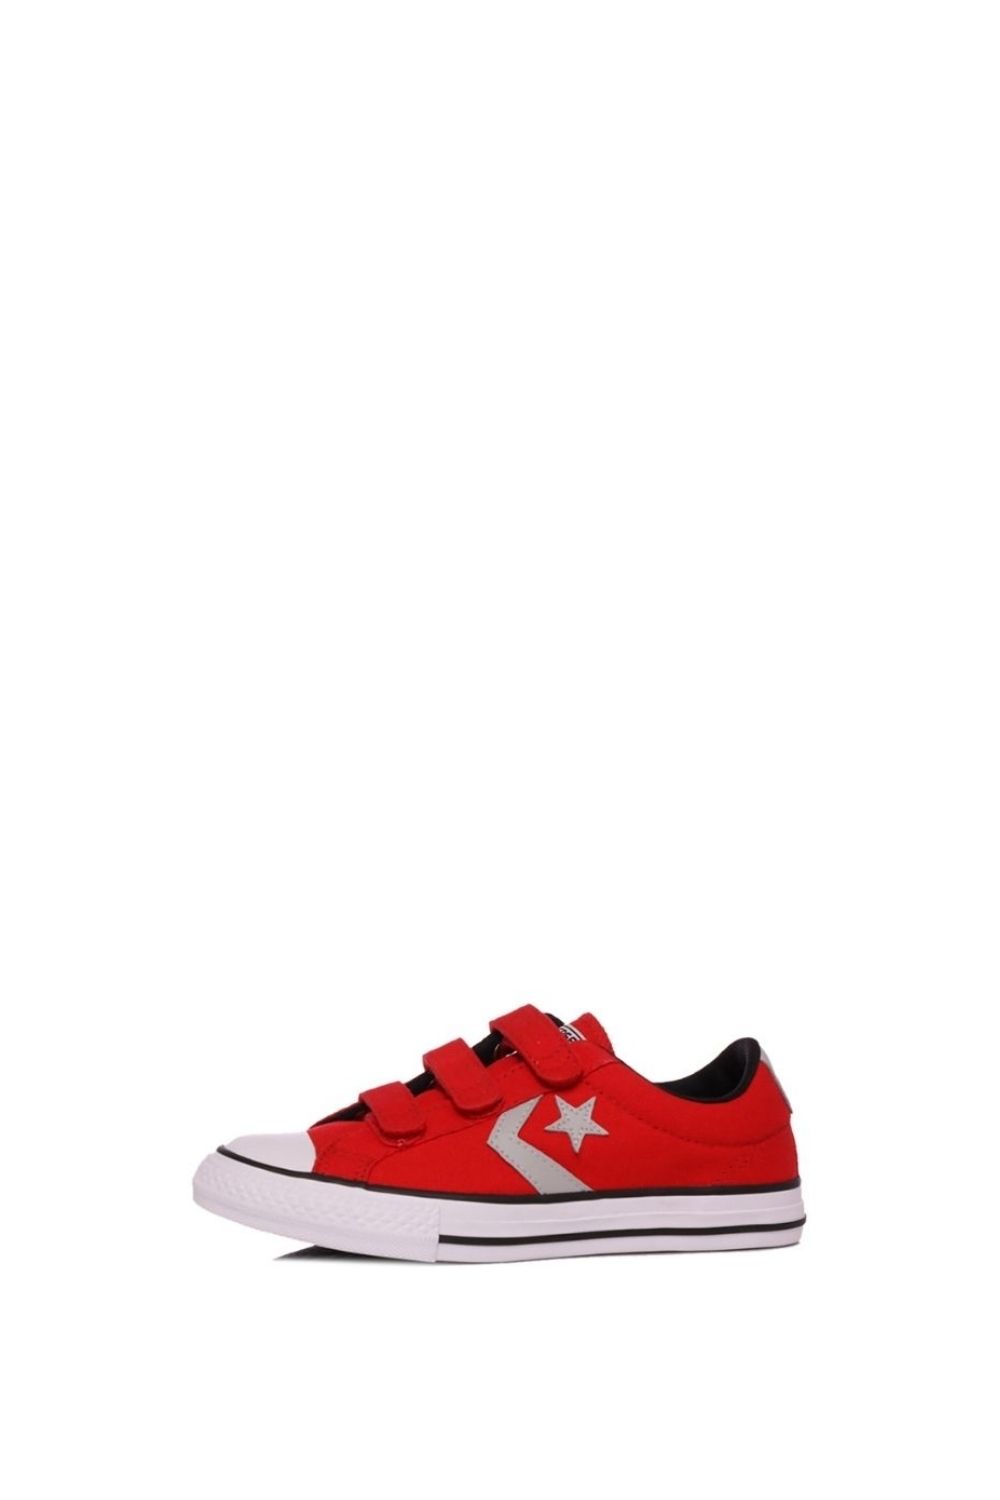 CONVERSE – Παιδικα sneakers CONVERSE Star Player EV 3V Ox κοκκινα γκρι